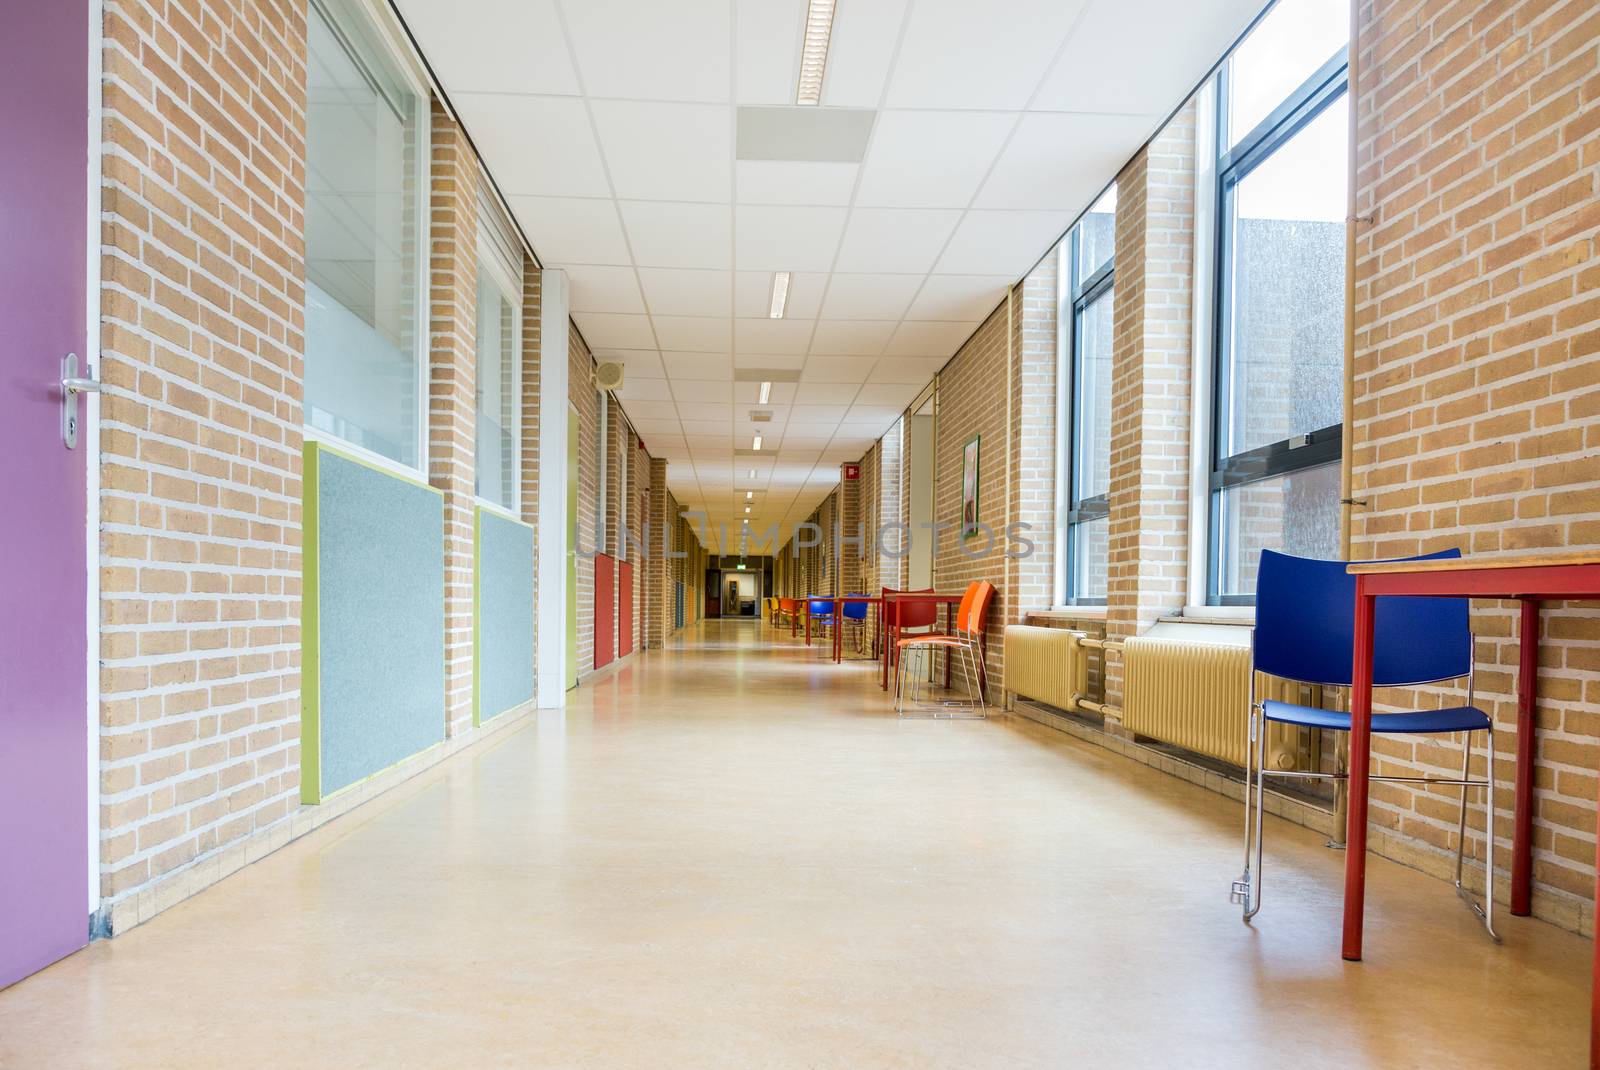 Long corridor with furniture in school building by BenSchonewille